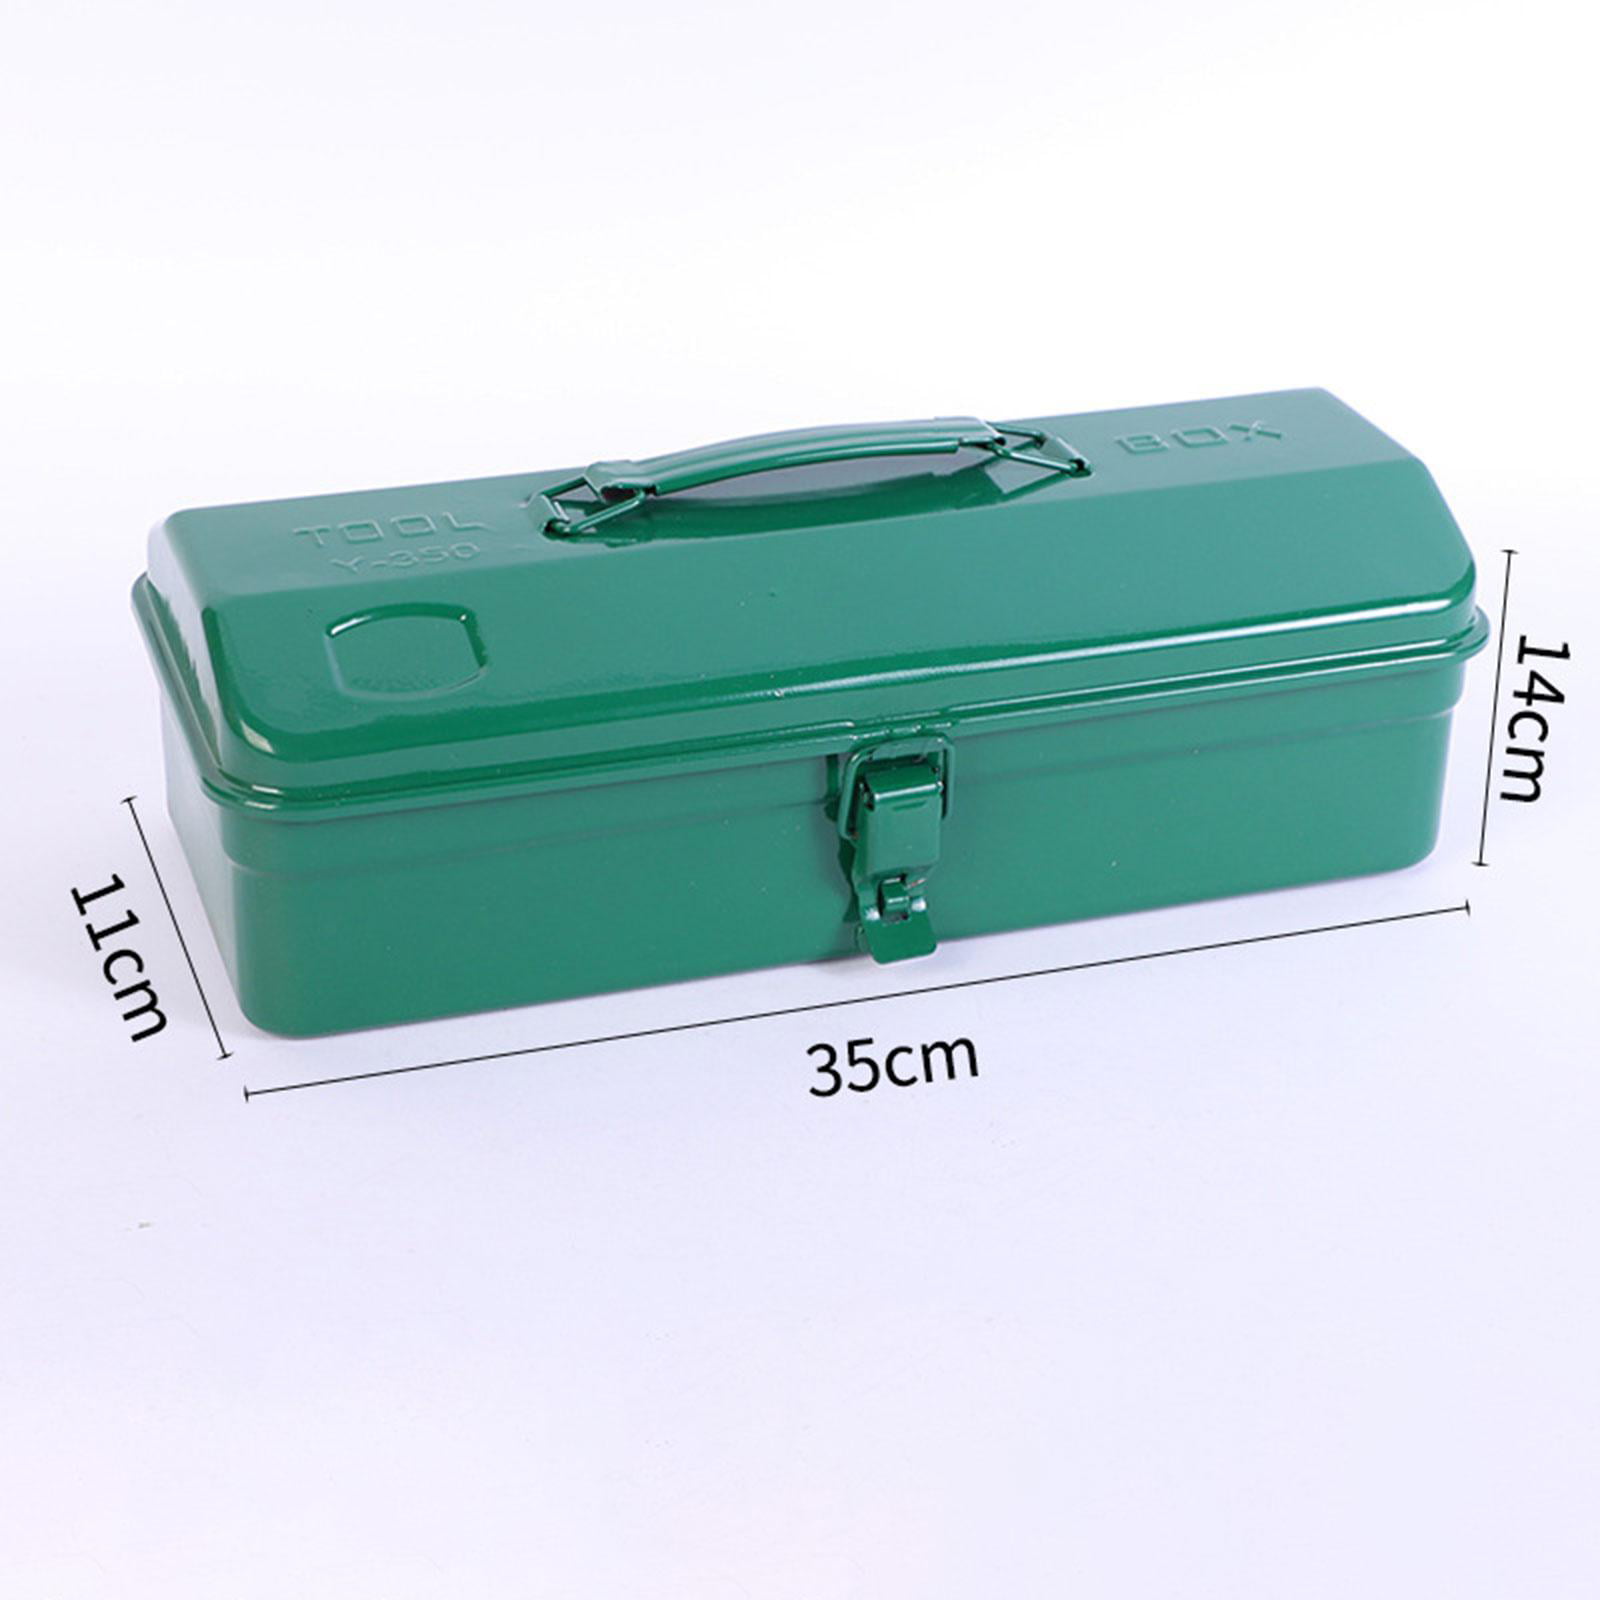 Workmate Tool Box Y-350 Mint